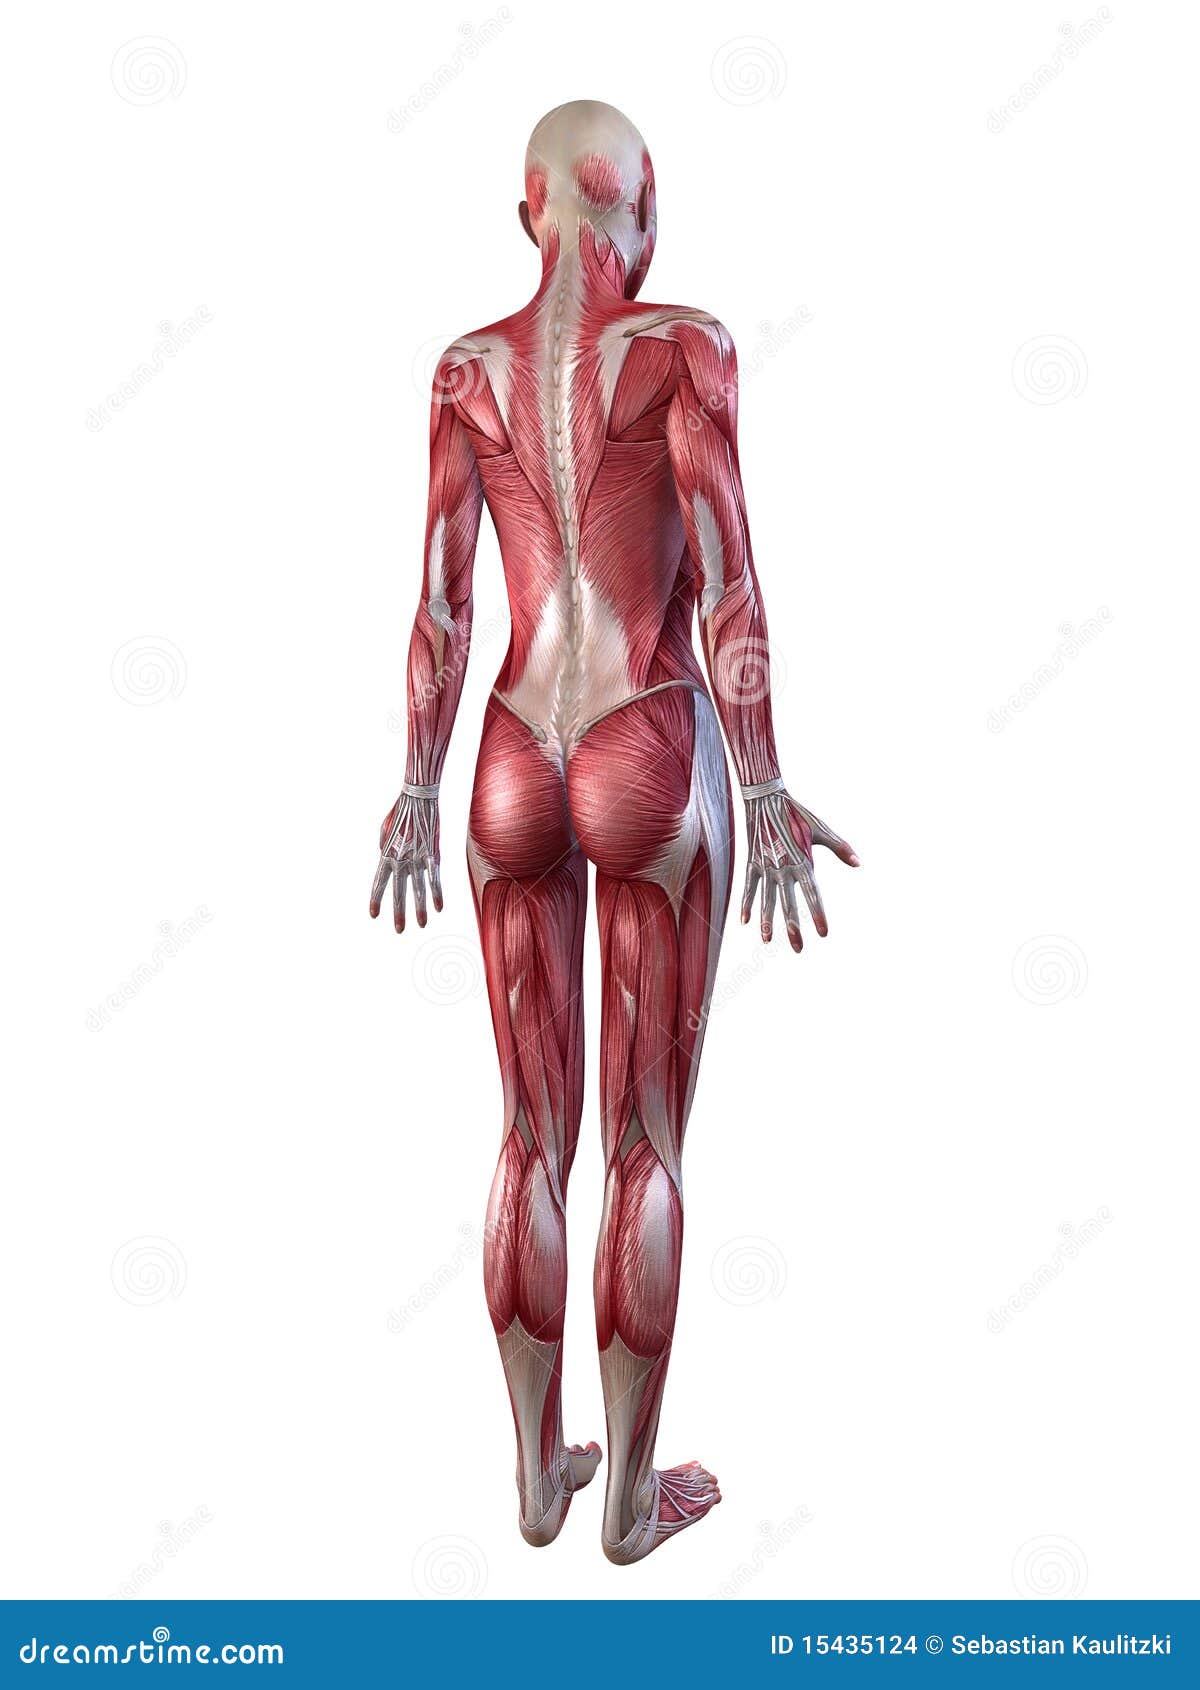 Muscular System Demonstration 115